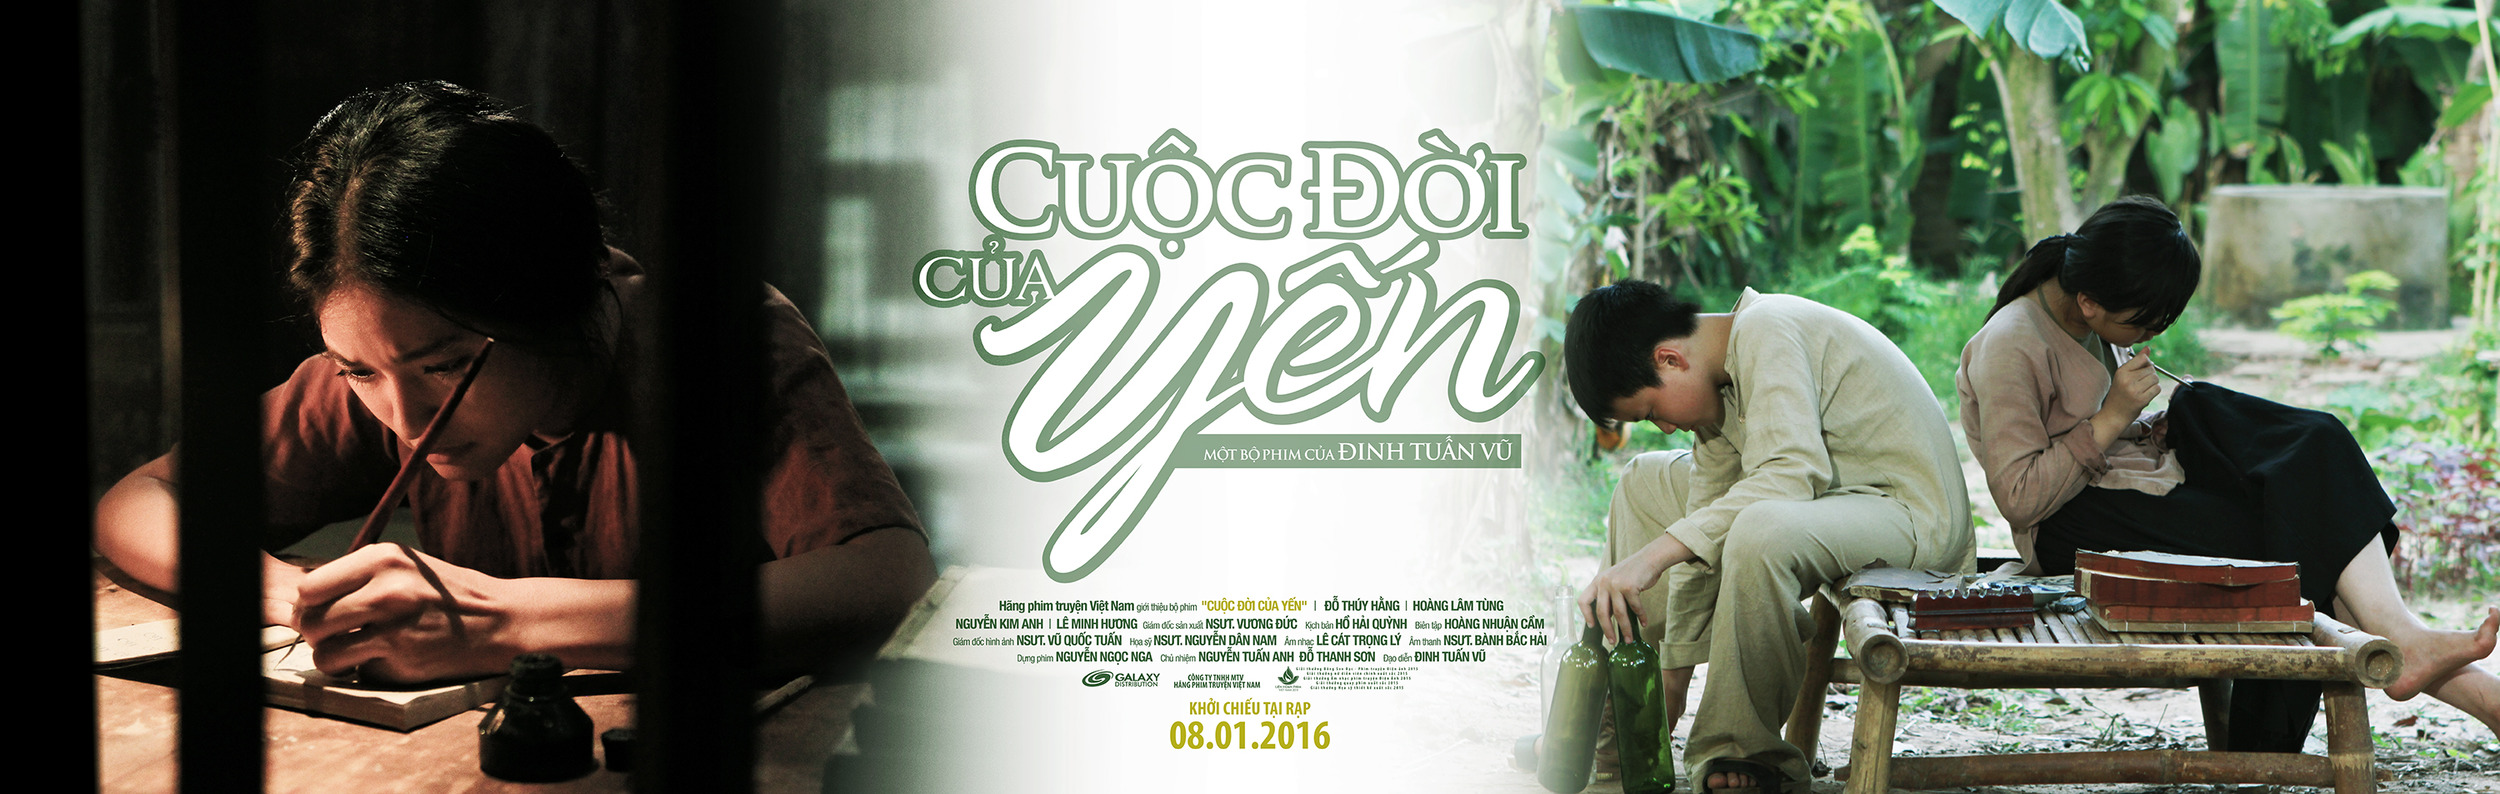 Mega Sized Movie Poster Image for Cuoc doi cua Yen (#2 of 2)